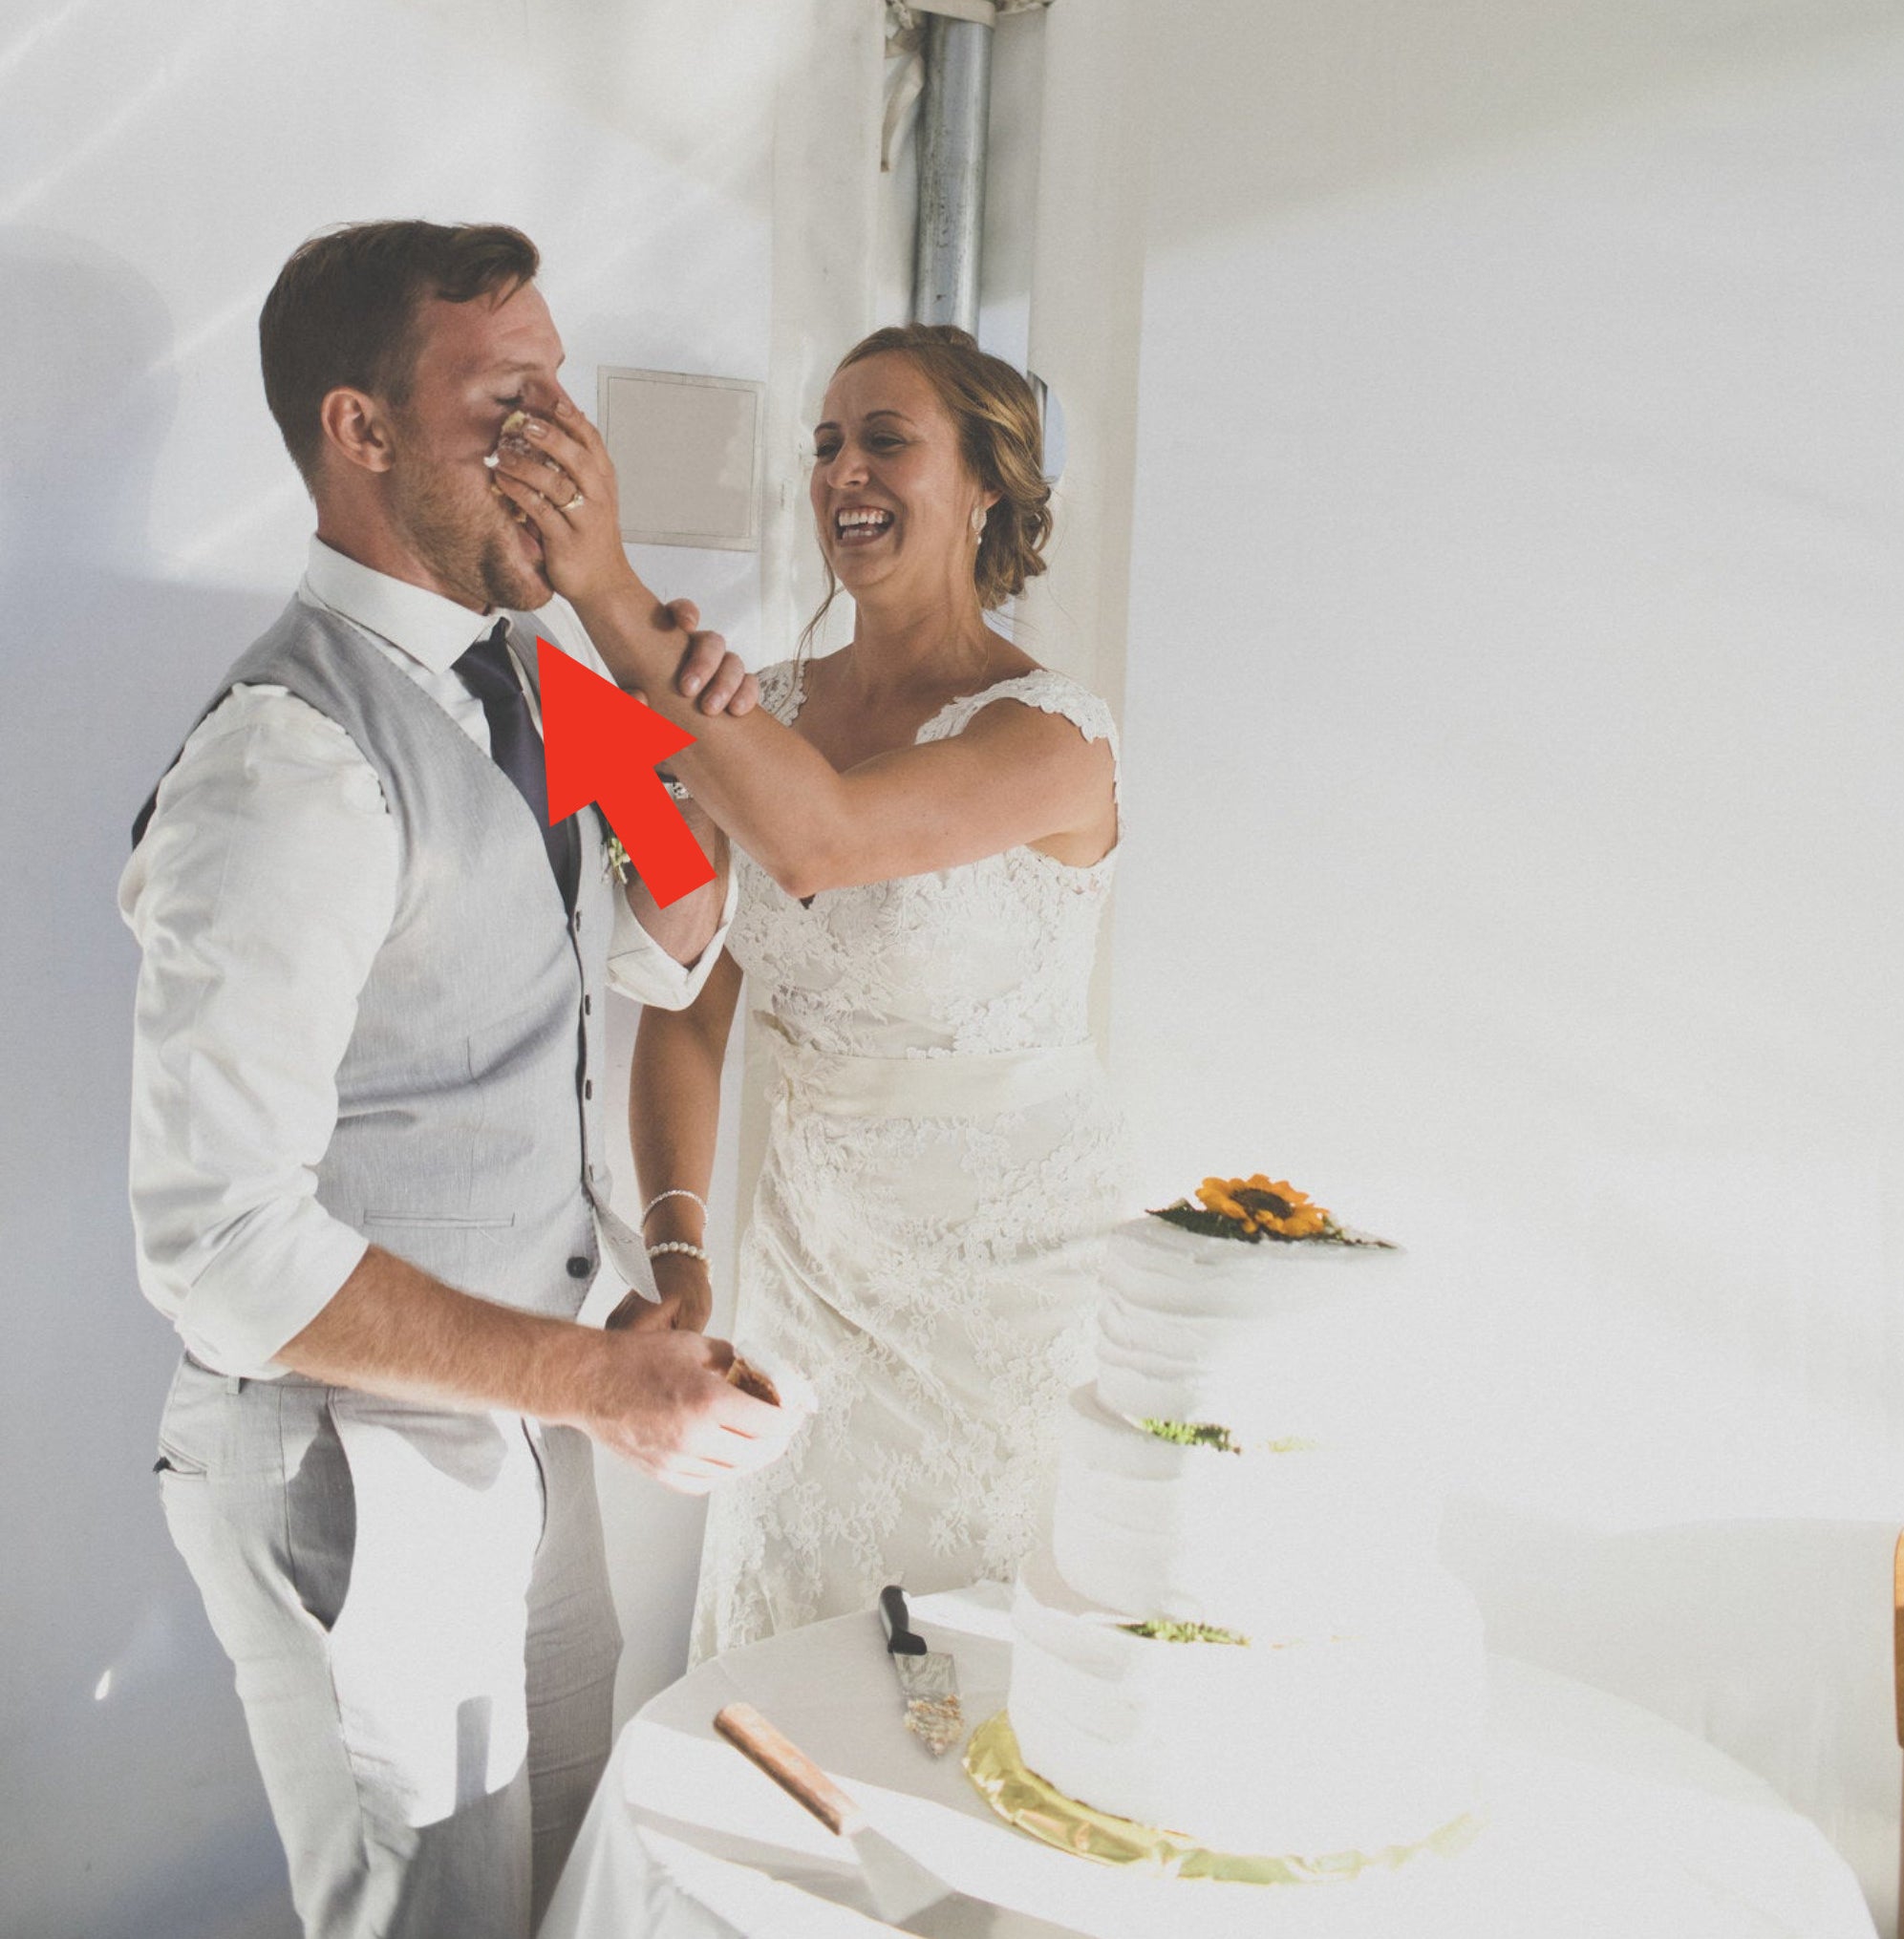 A bride shoves cake into the groom&#x27;s face